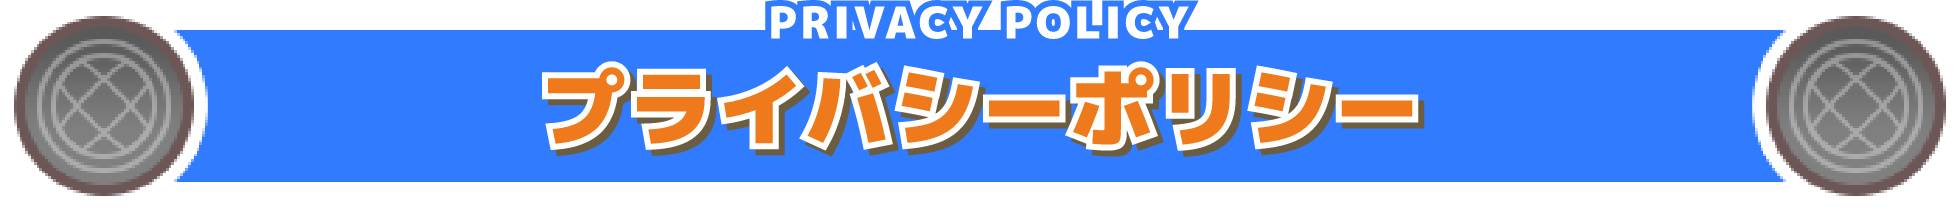 PRIVACY POLICY プライバシーポリシー